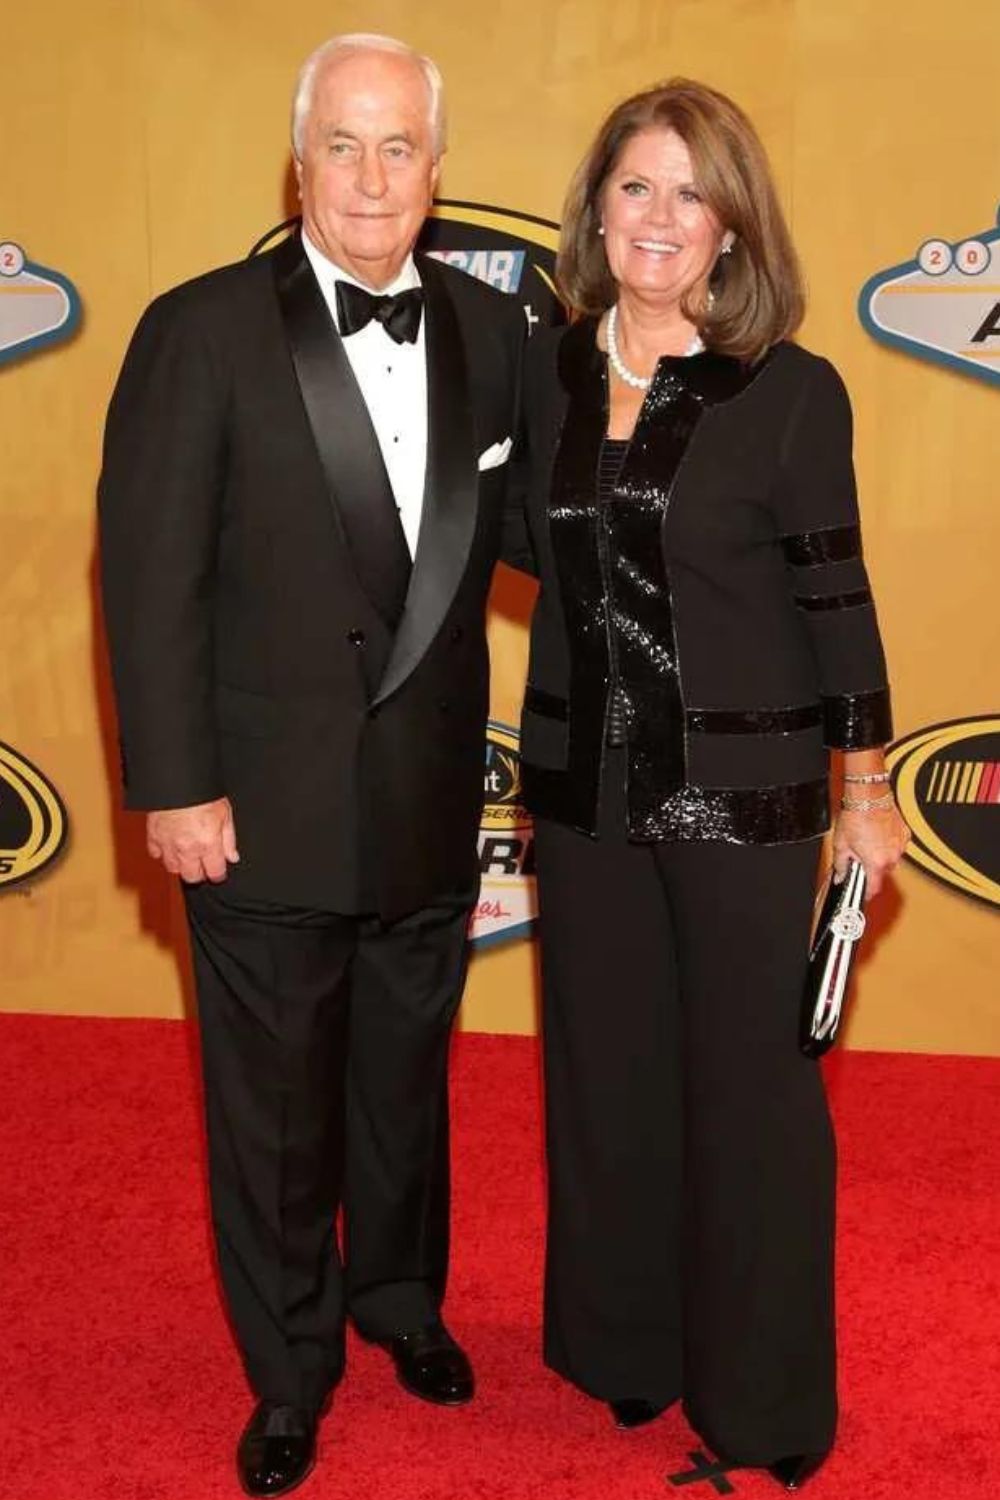 Roger Penske With His Wife Kathy Penske